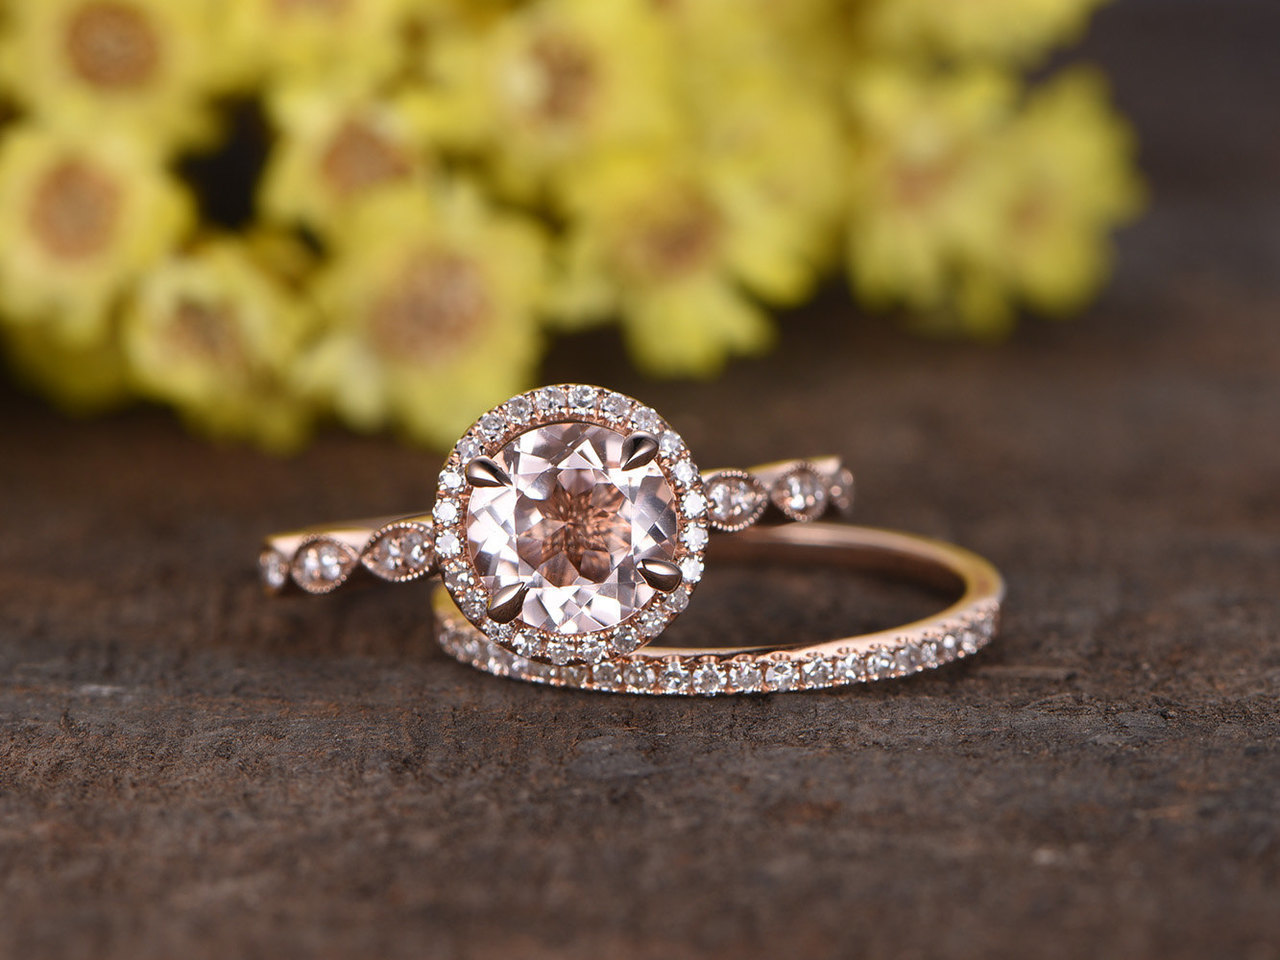 7mm Round Morganite & Diamond Engagement Halo Bridal Ring Set 14K Rose Gold Over